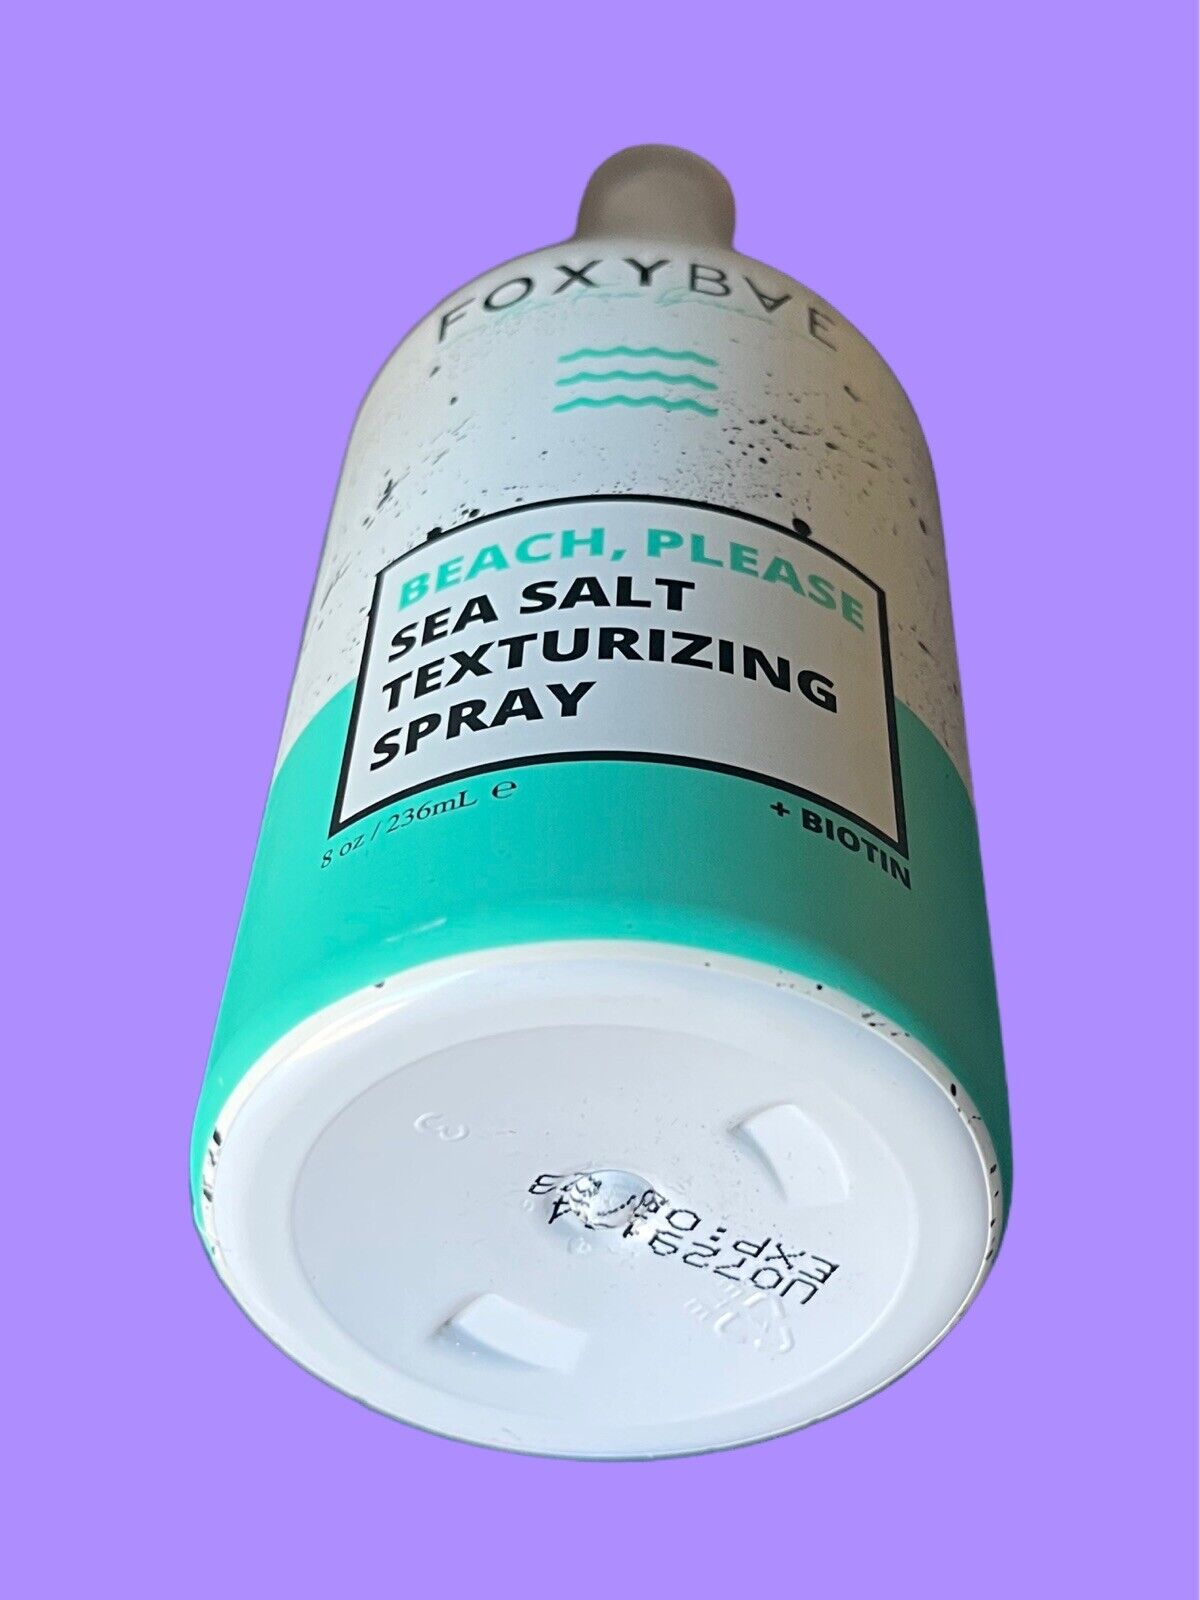 Beach, Please Sea Salt Texturizing Spray + Biotin –